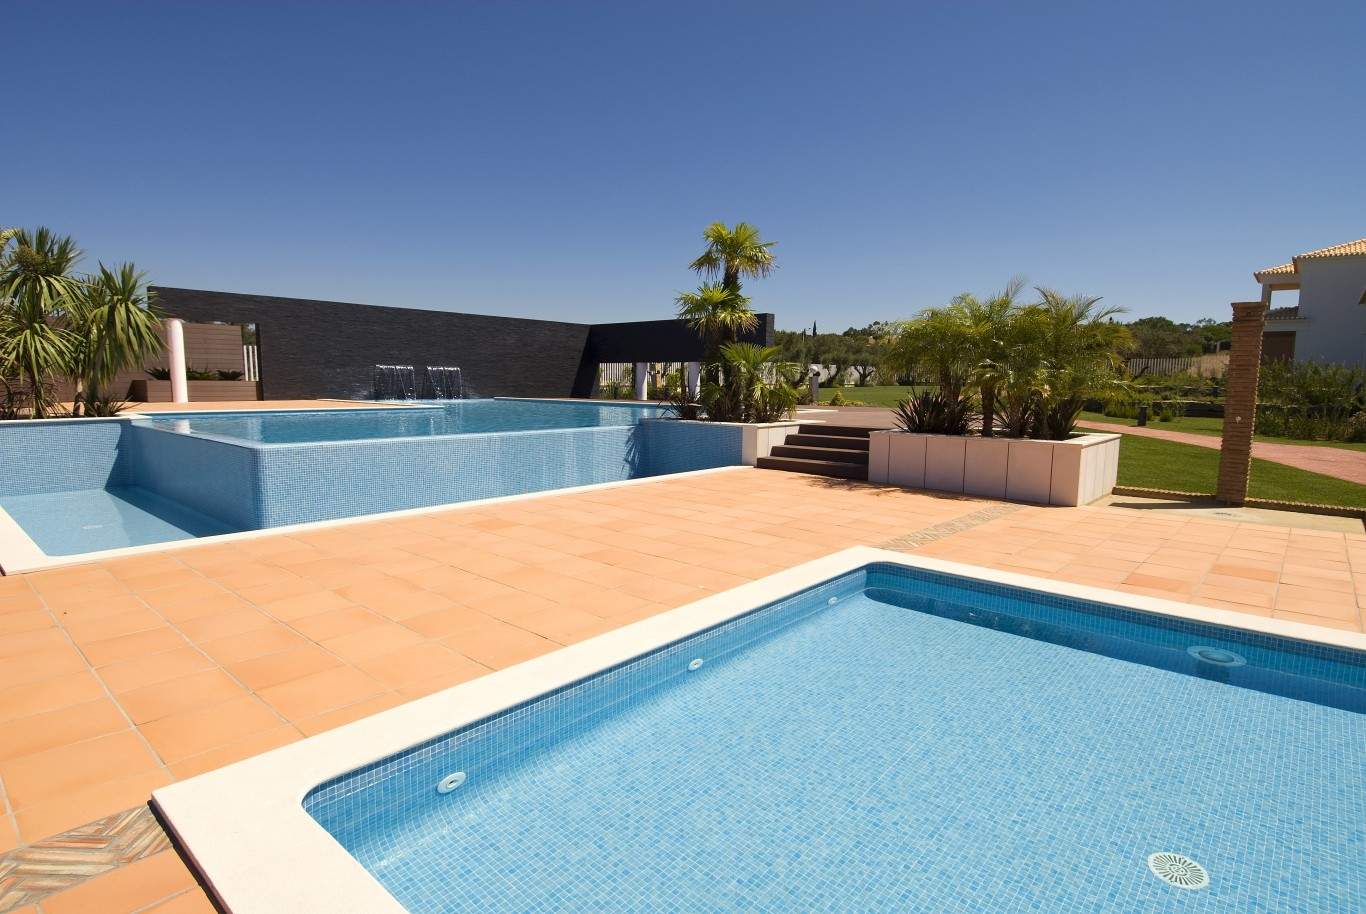 Venta de vivienda nueva, piscina, golf de Vilamoura, Algarve, Portugal_54168